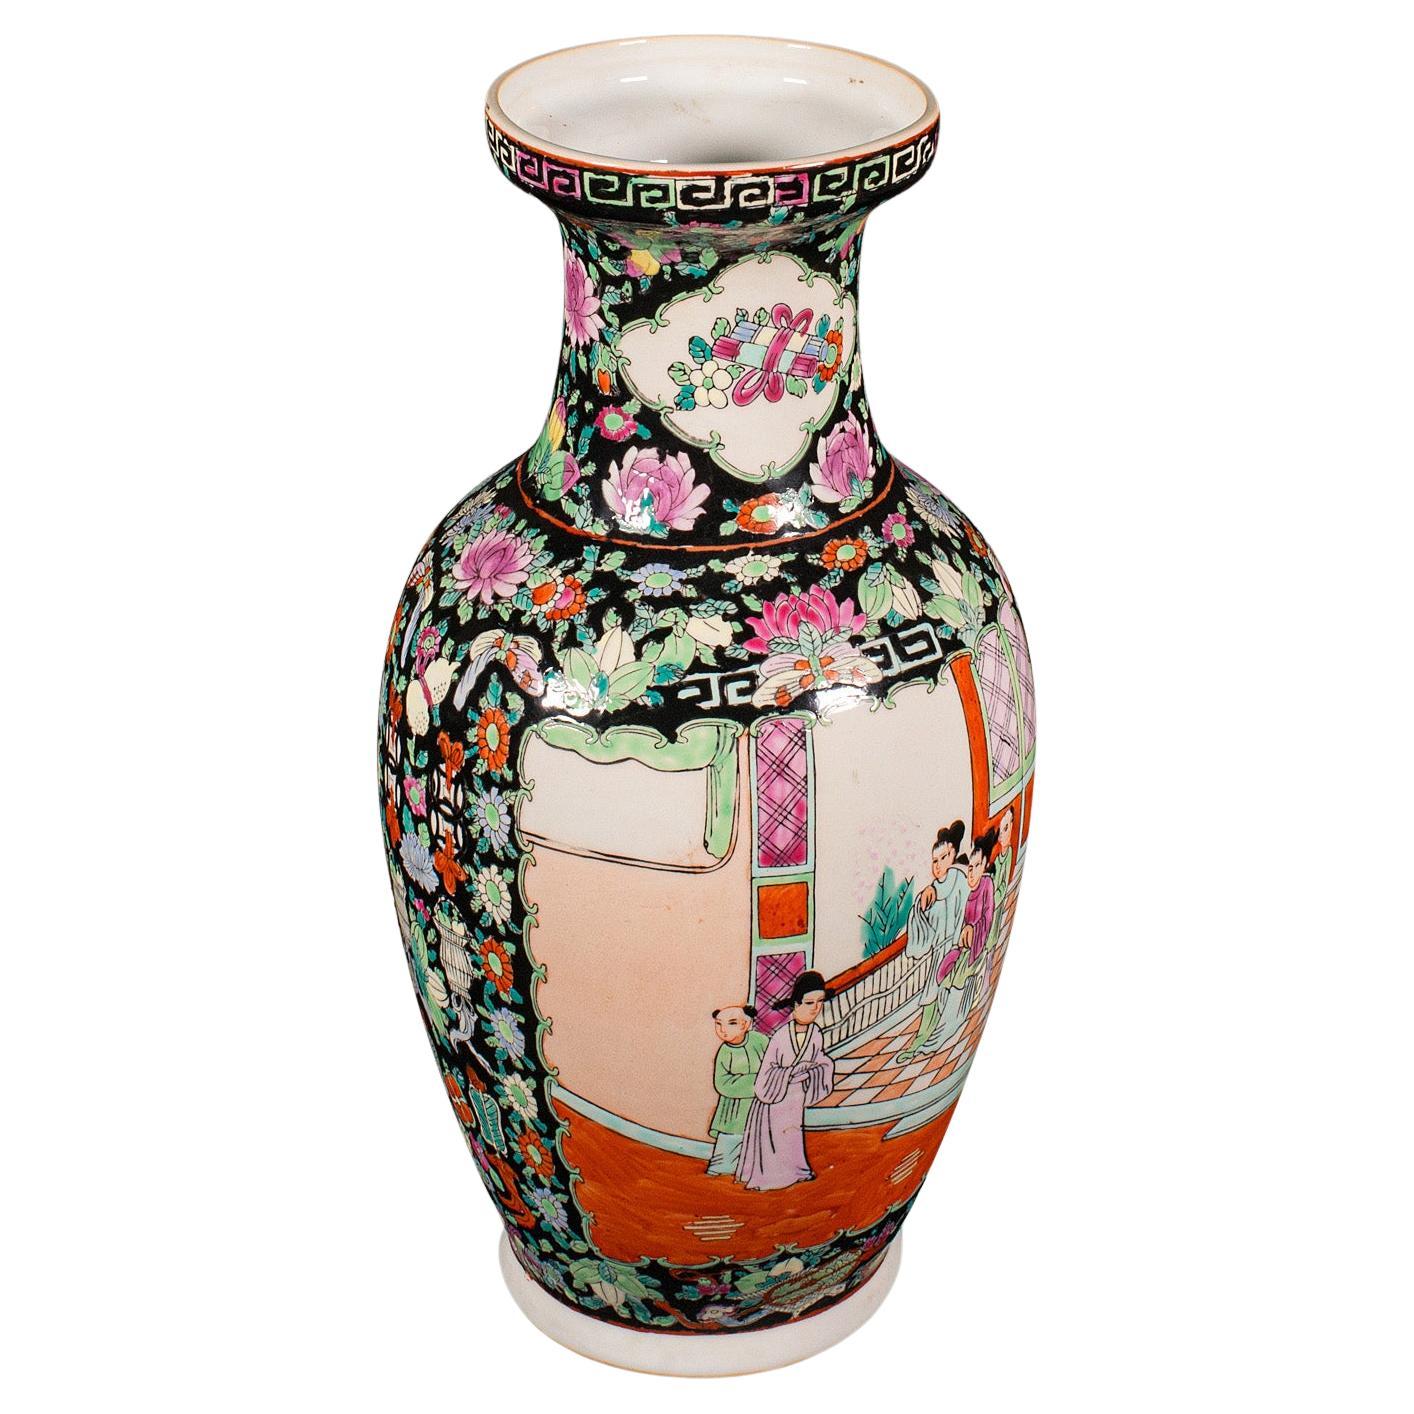 Tall Vintage Flower Vase, Chinese, Ceramic, Display Urn, Art Deco, Mid Century